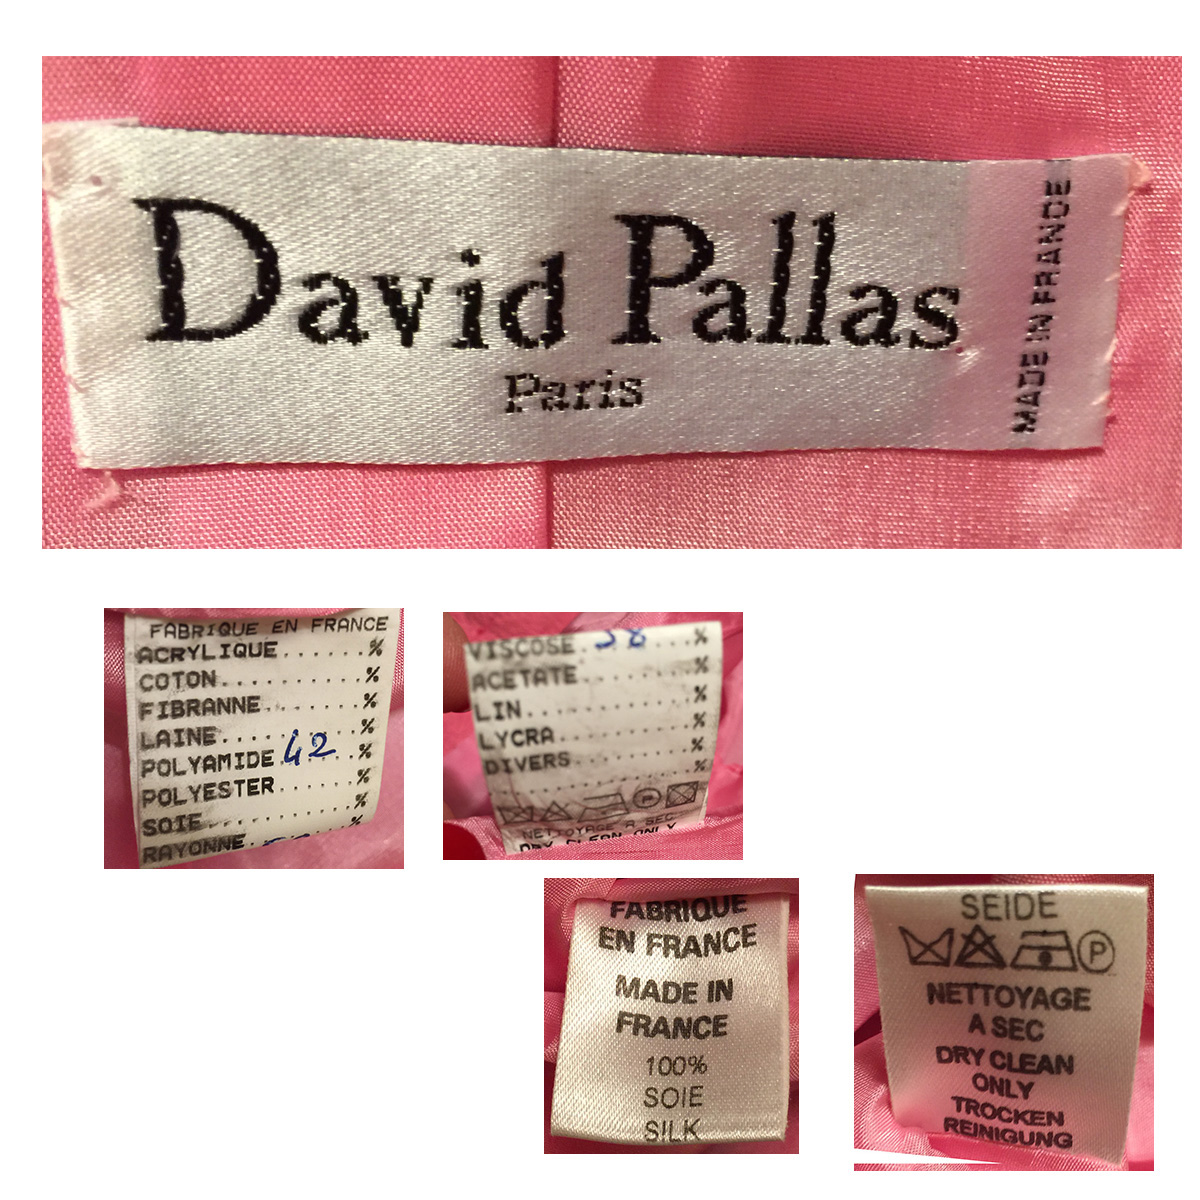 David Pallas France label